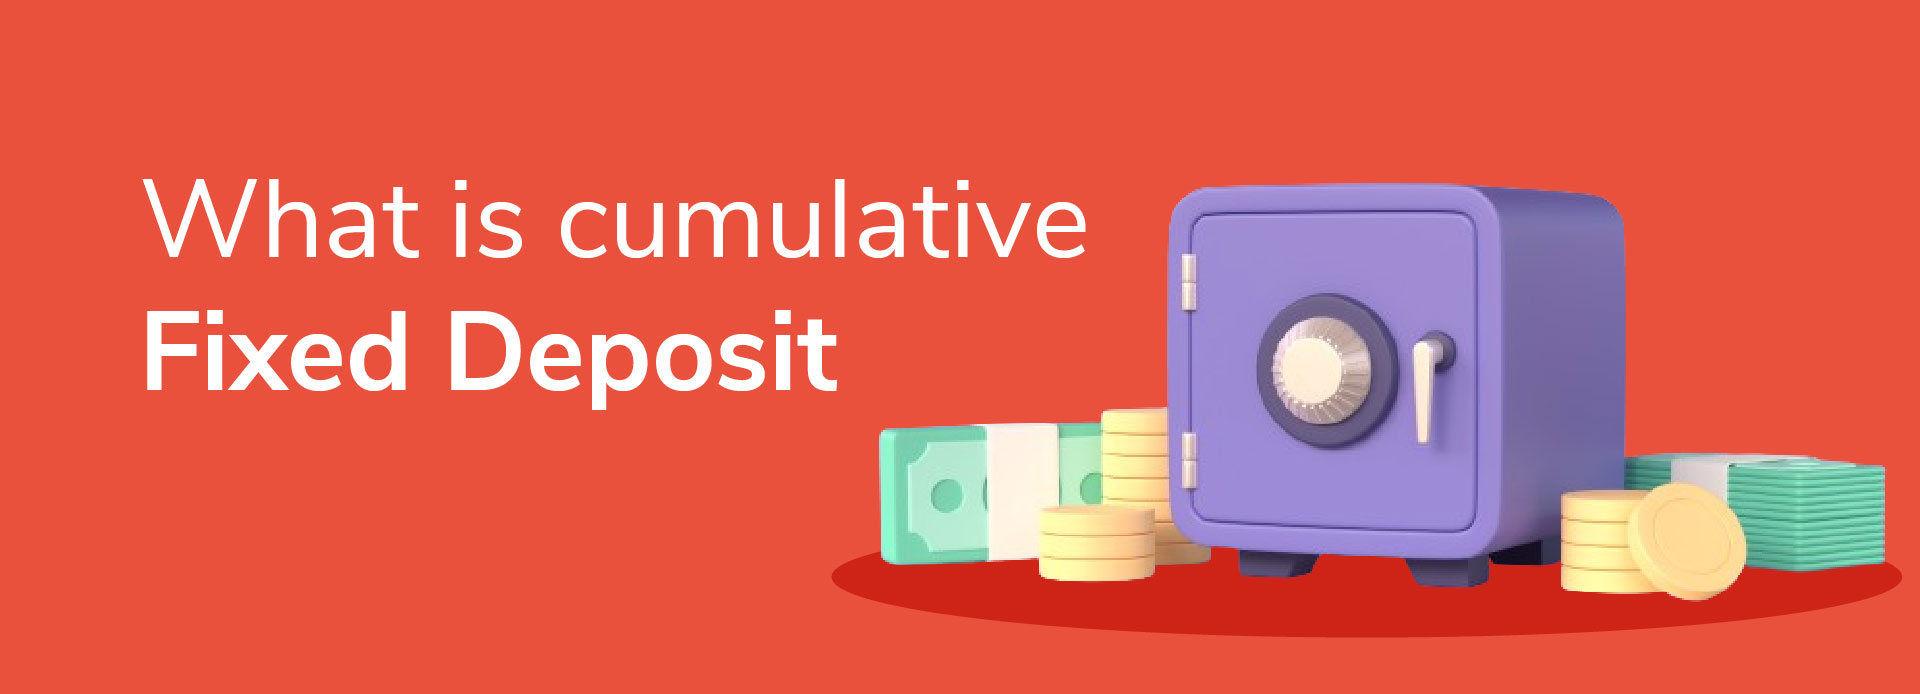 What is a Cumulative Fixed Deposit?